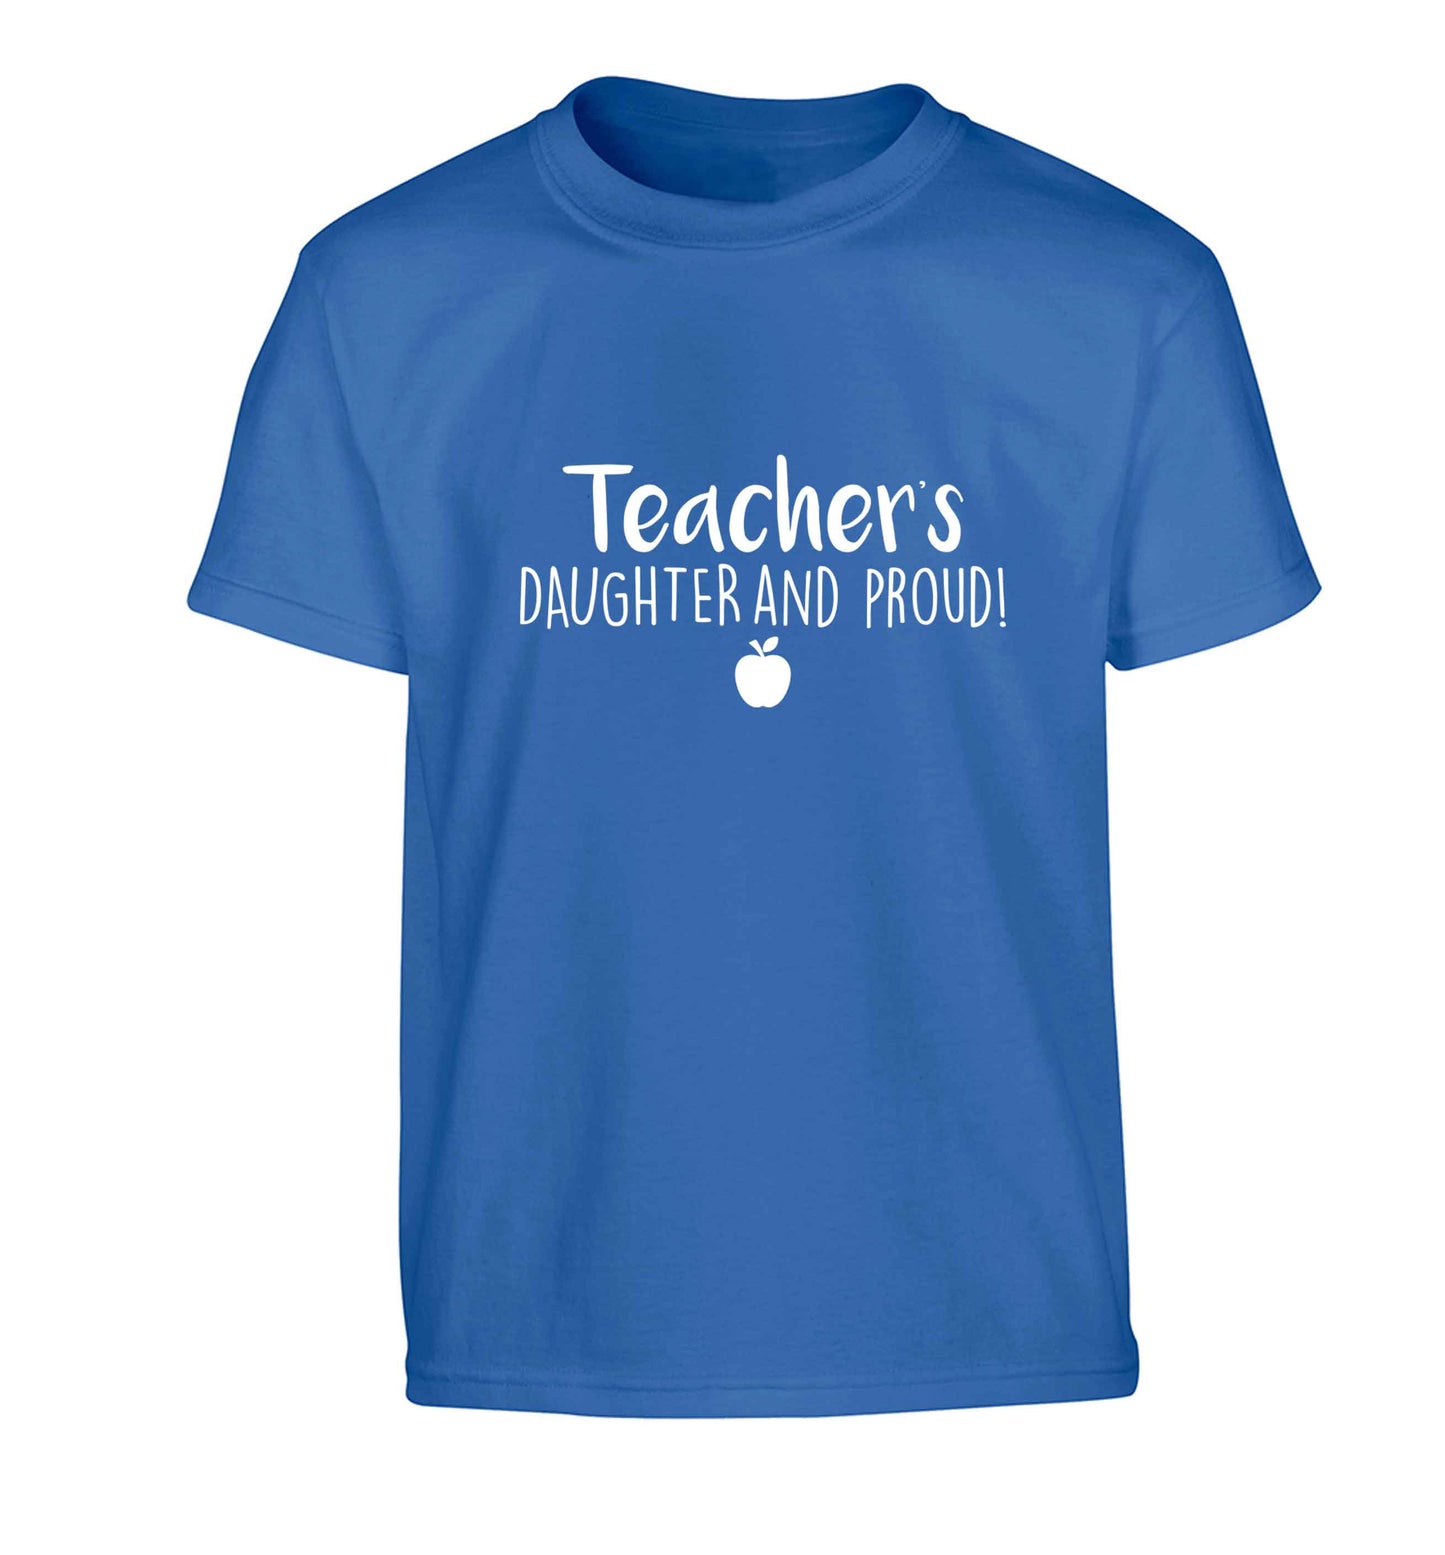 Teachers daughter and proud Children's blue Tshirt 12-13 Years